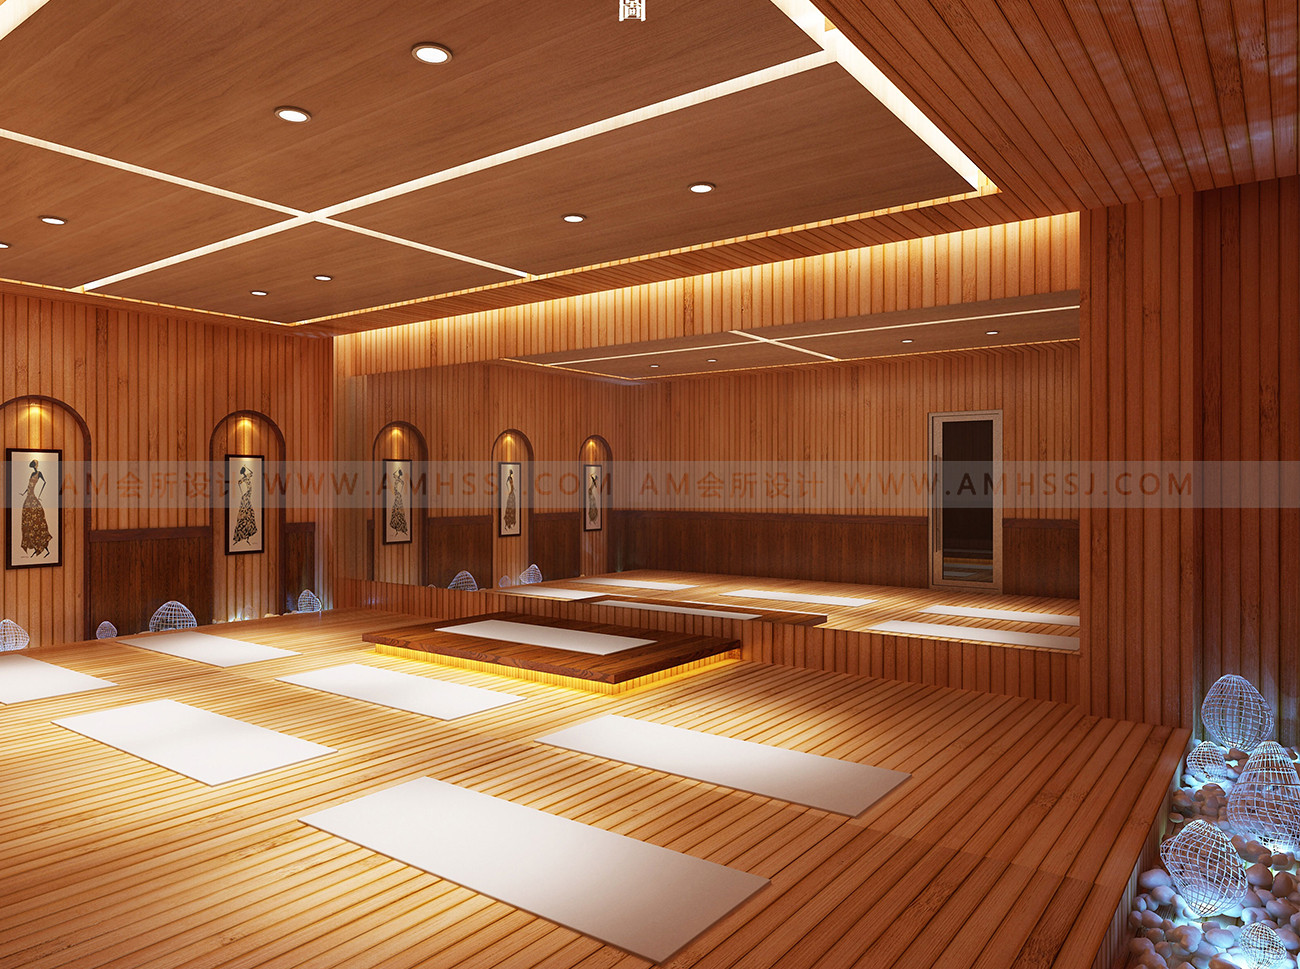 AM DESIGN | Design of yoga room area of Ge Yi Mei gym